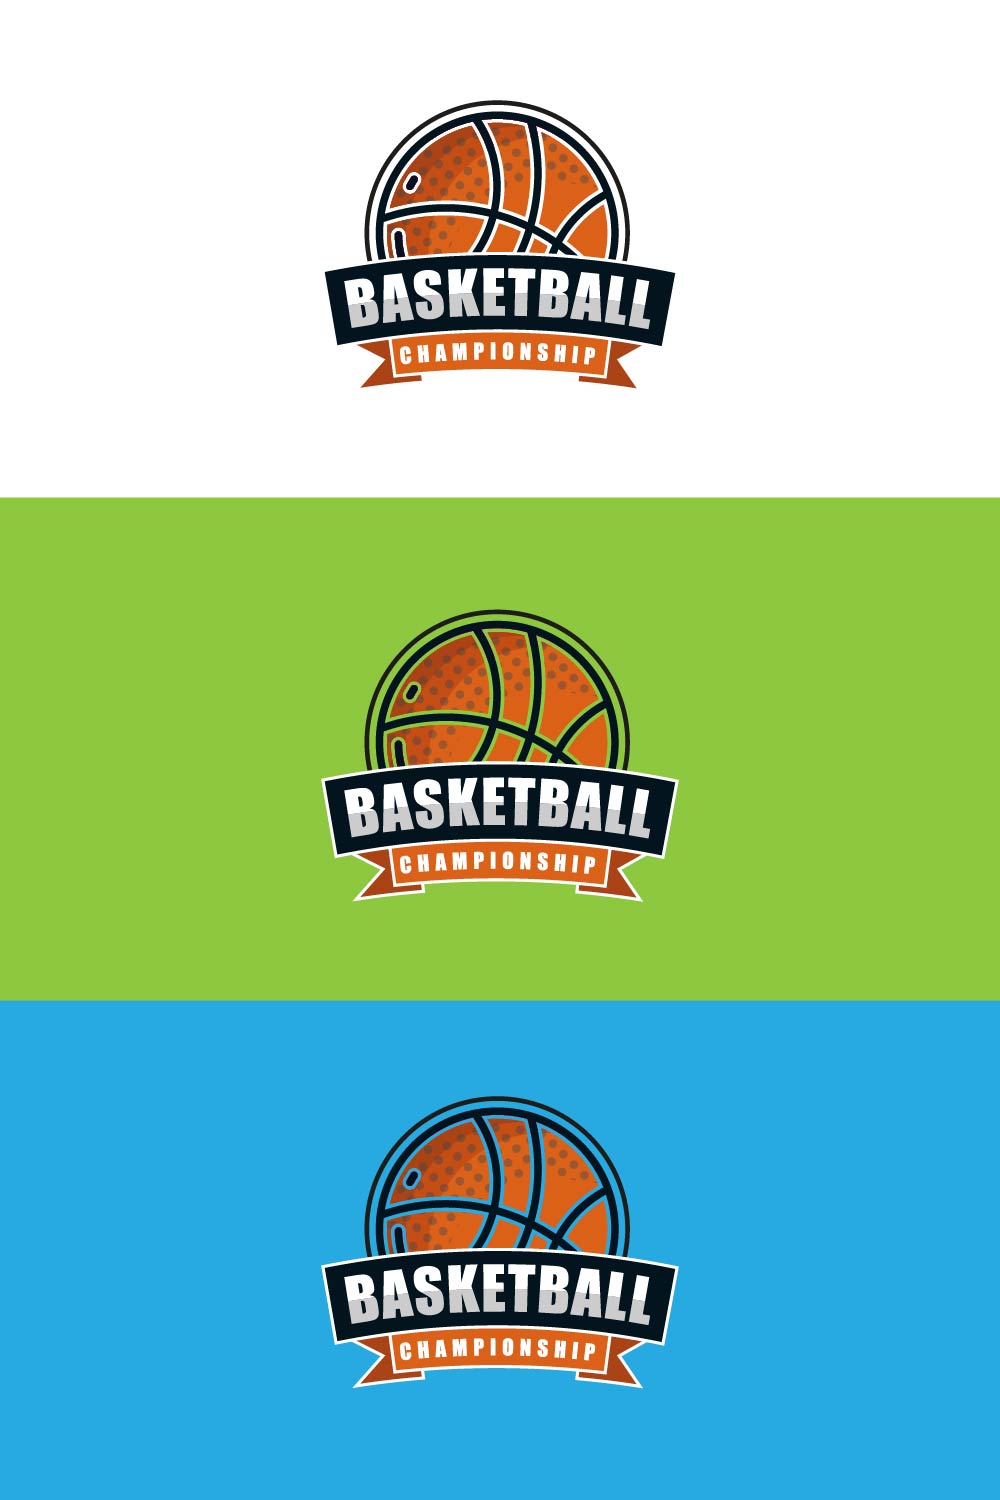 Basketball Pinterest board cover